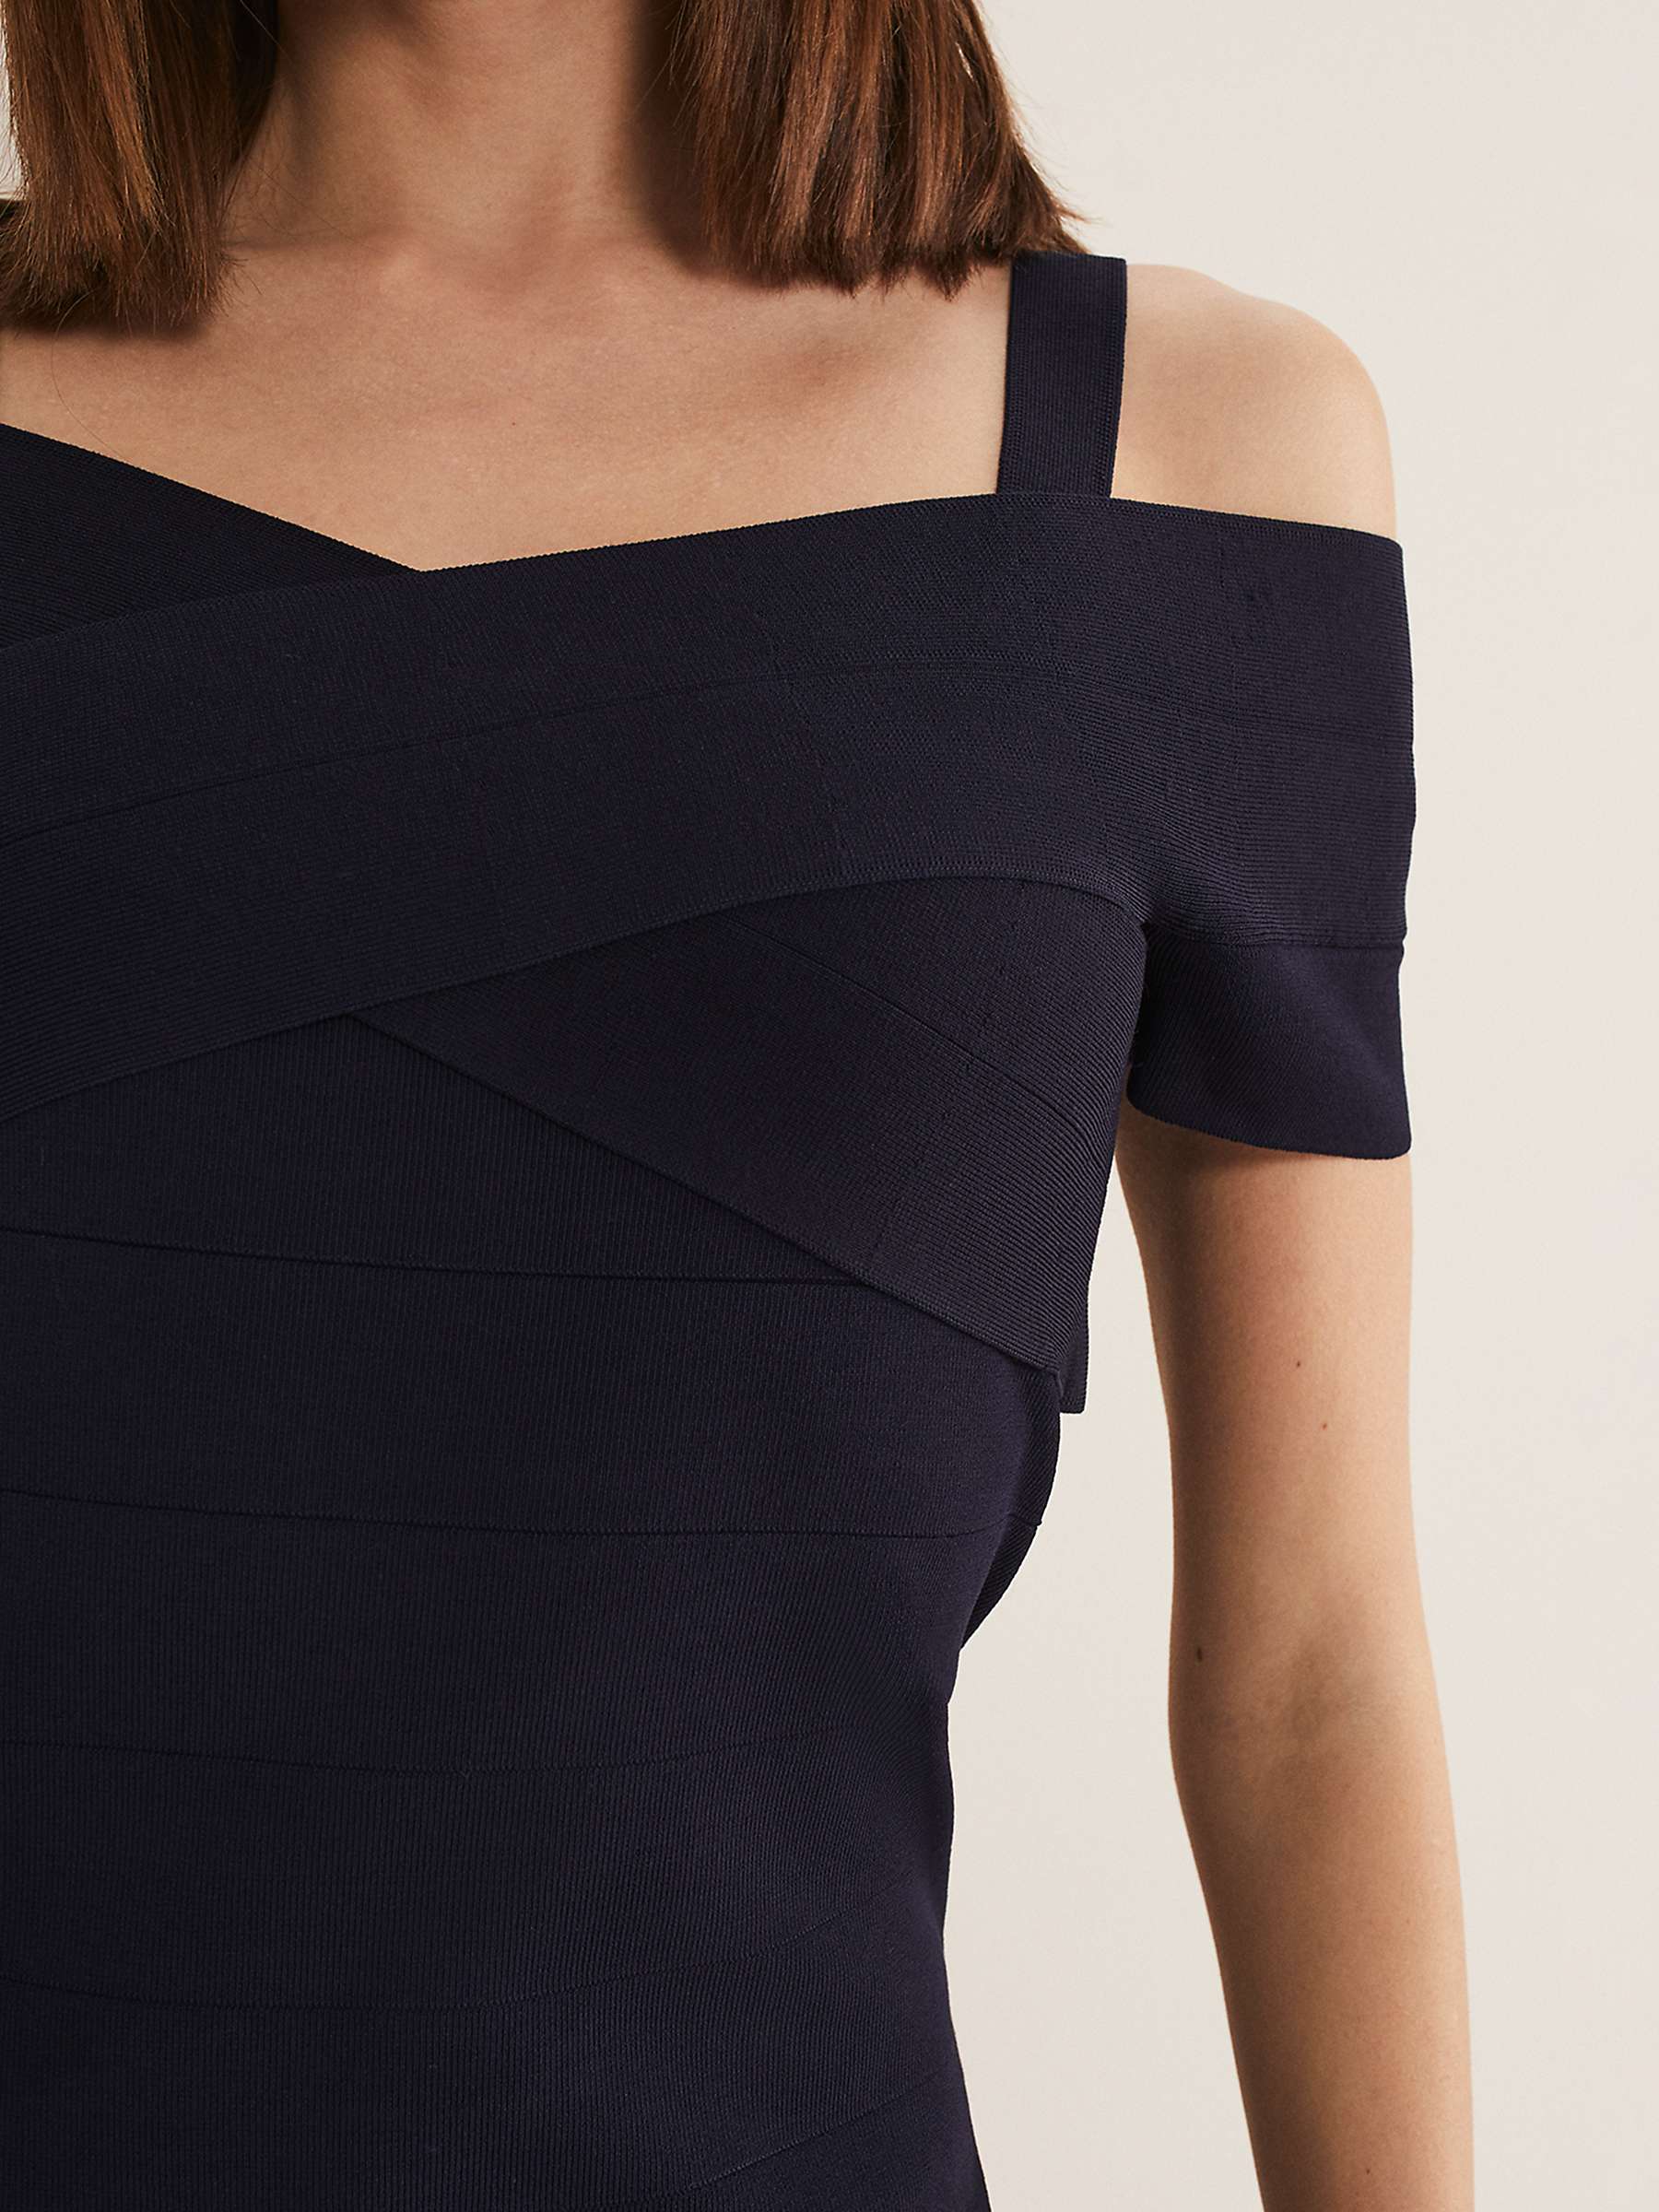 Buy Phase Eight Zella Knitted Bandage Dress, Navy Online at johnlewis.com